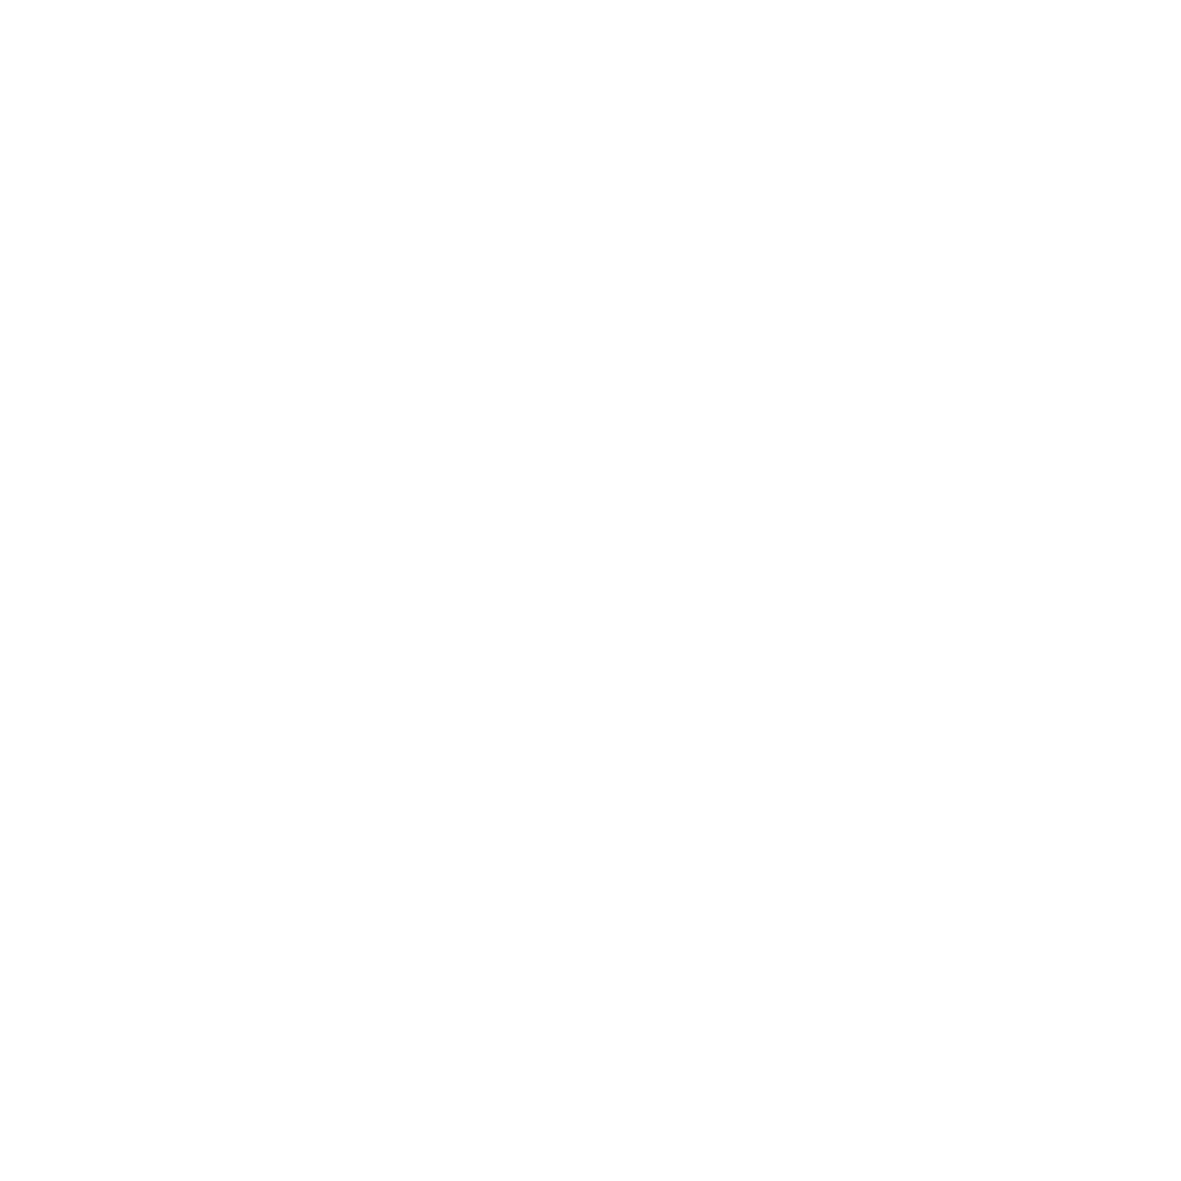 TOP Worldwide LinkedIn